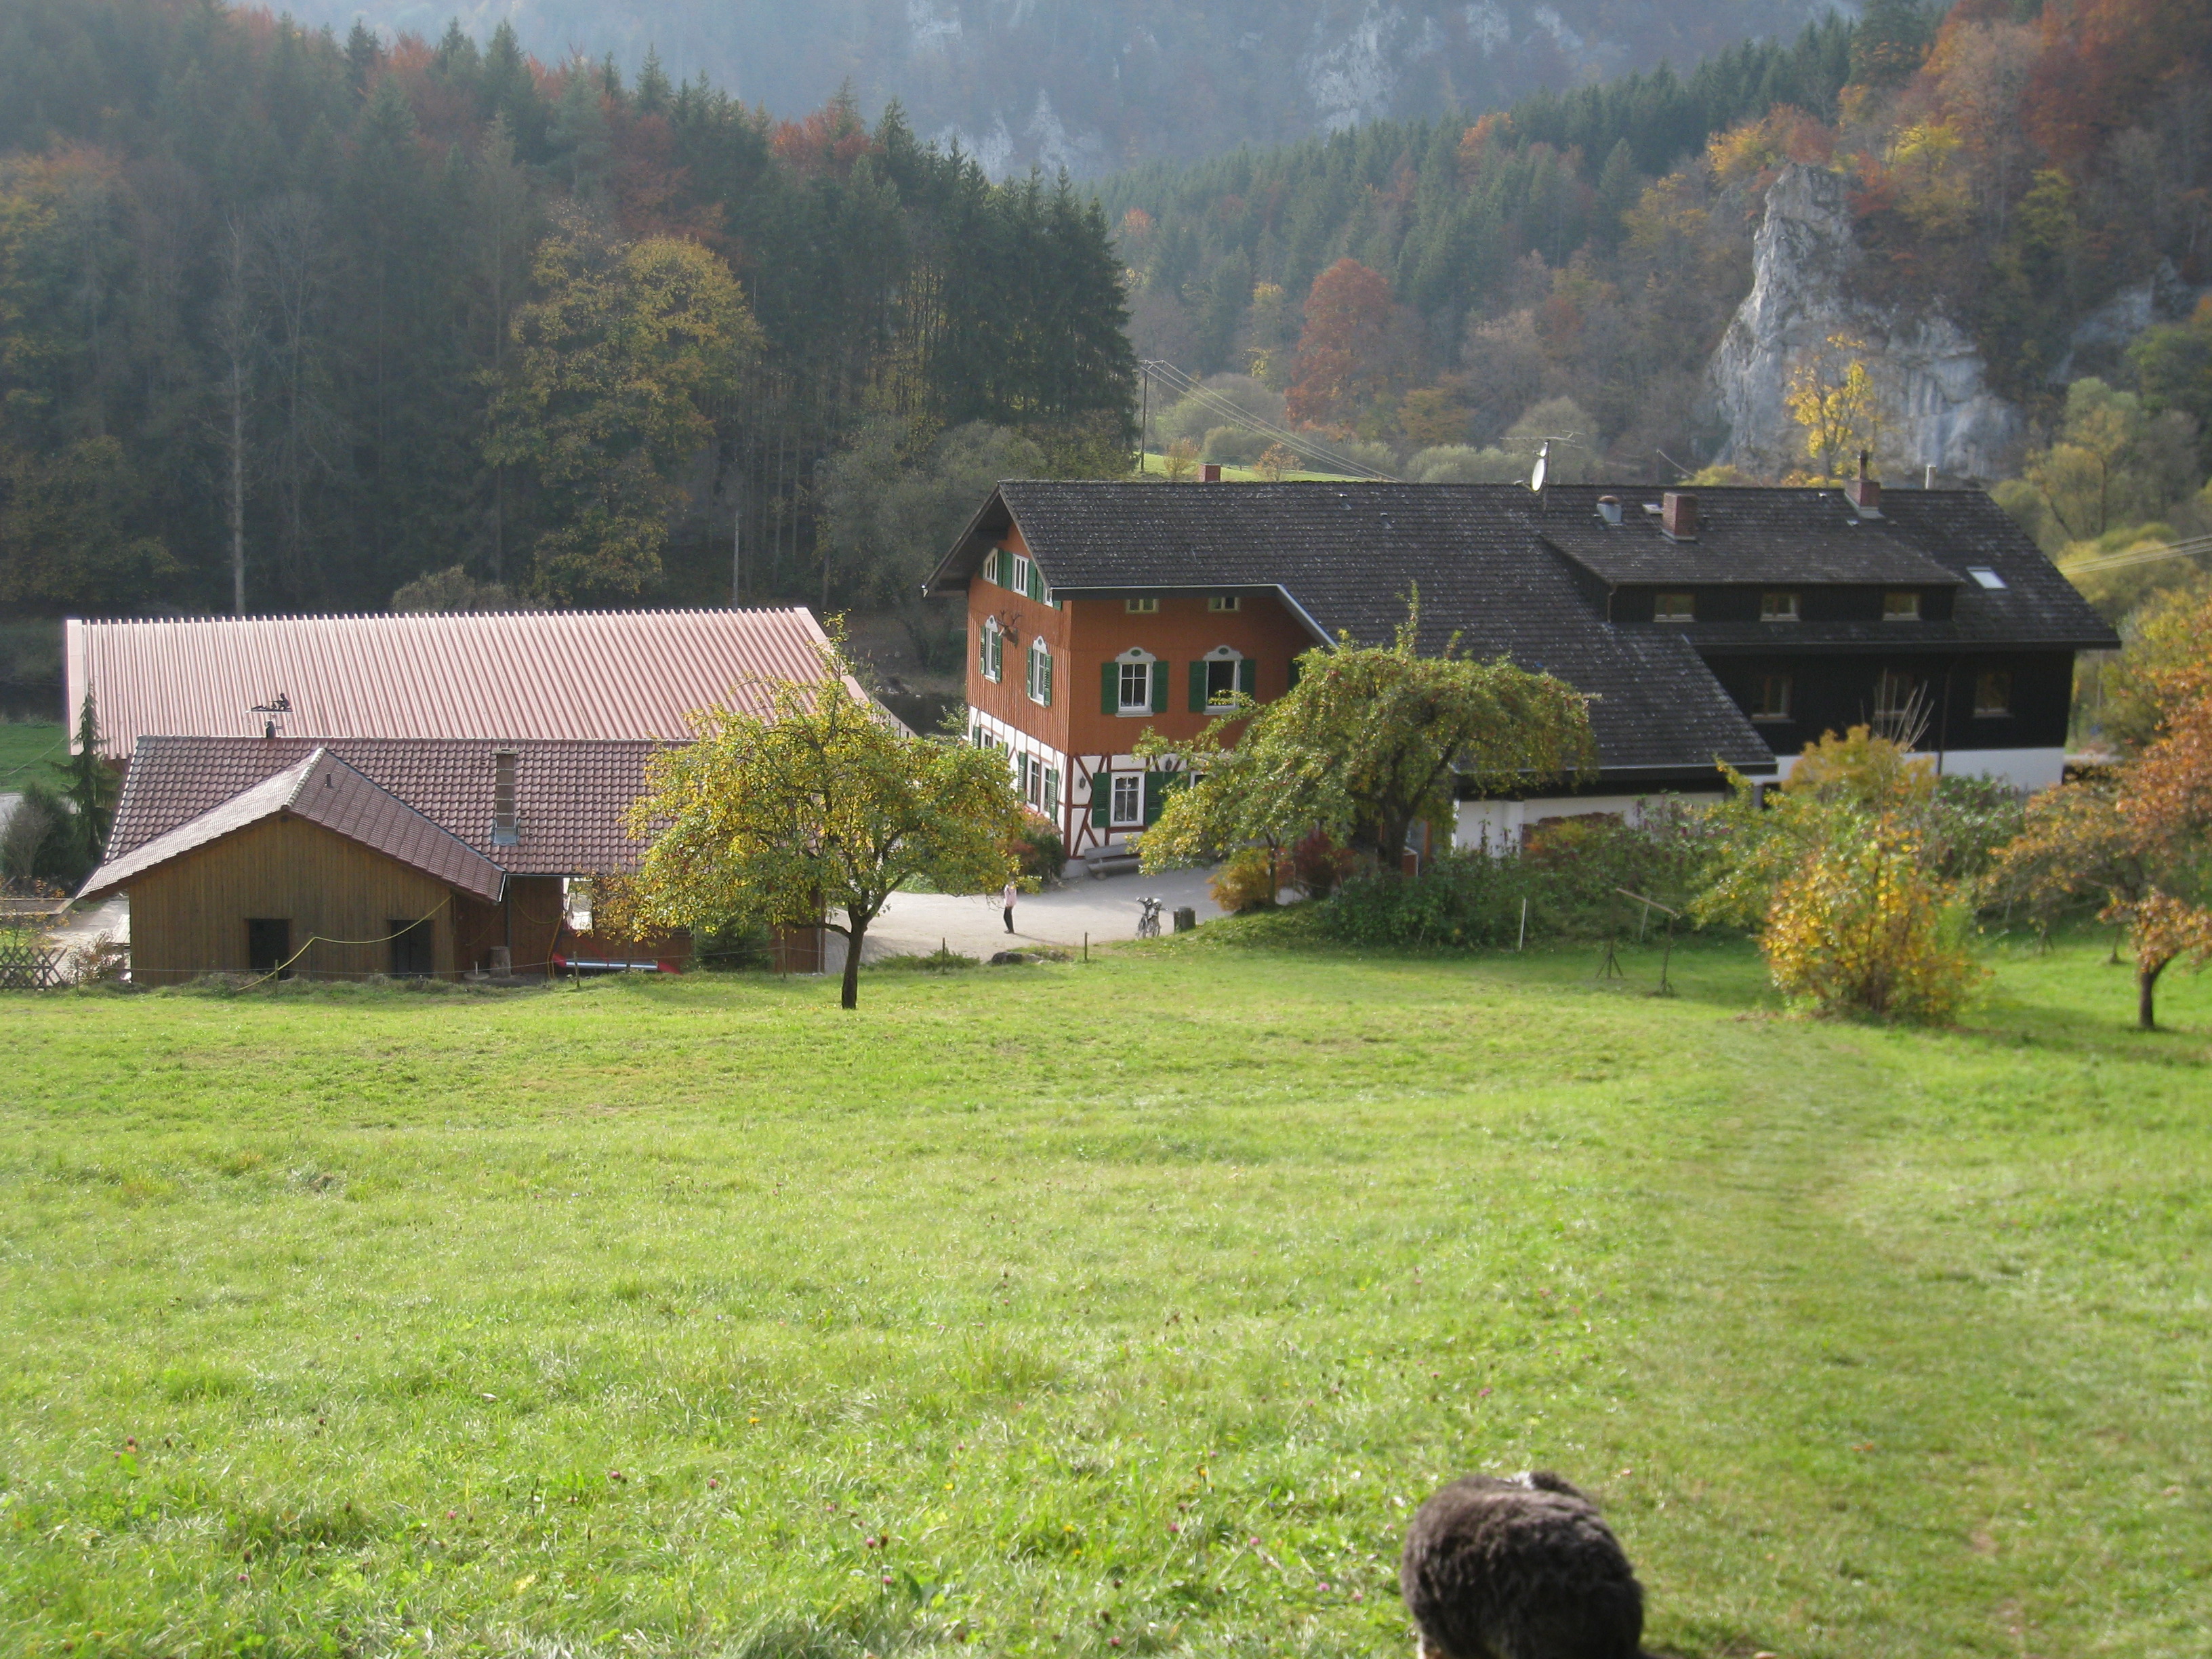 Jägerhaus im Herbst